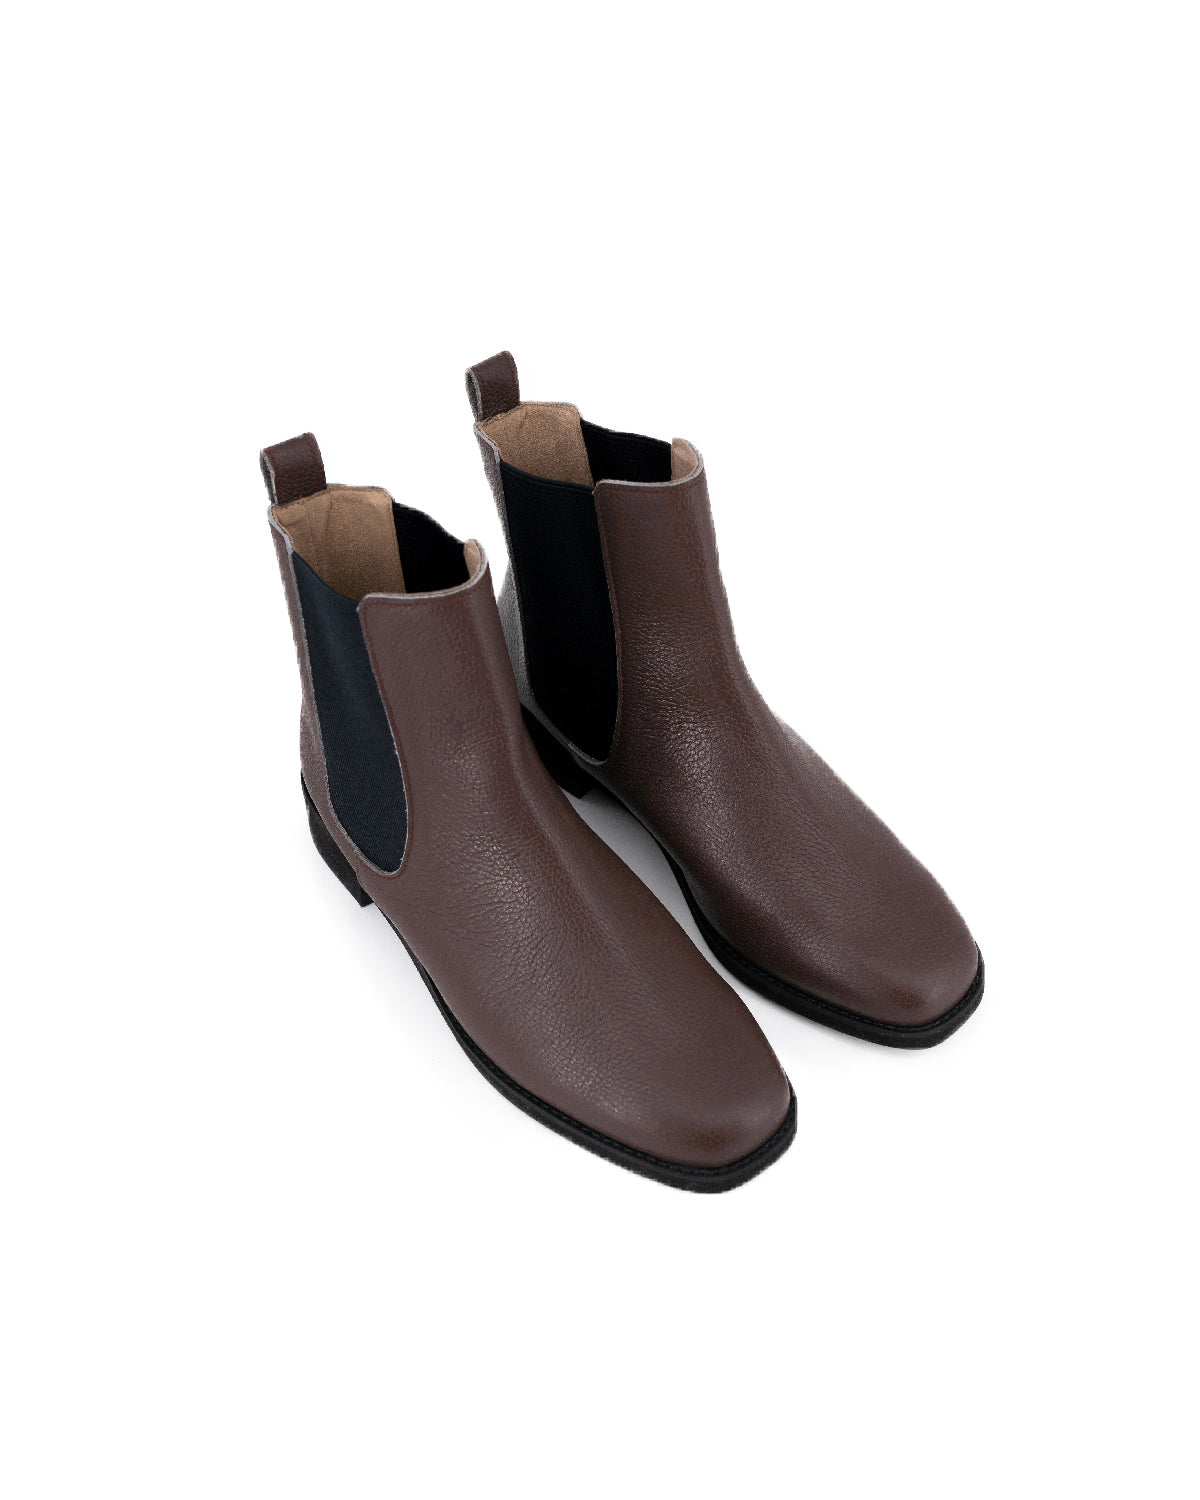 Chelsea Boots - Walnut brown